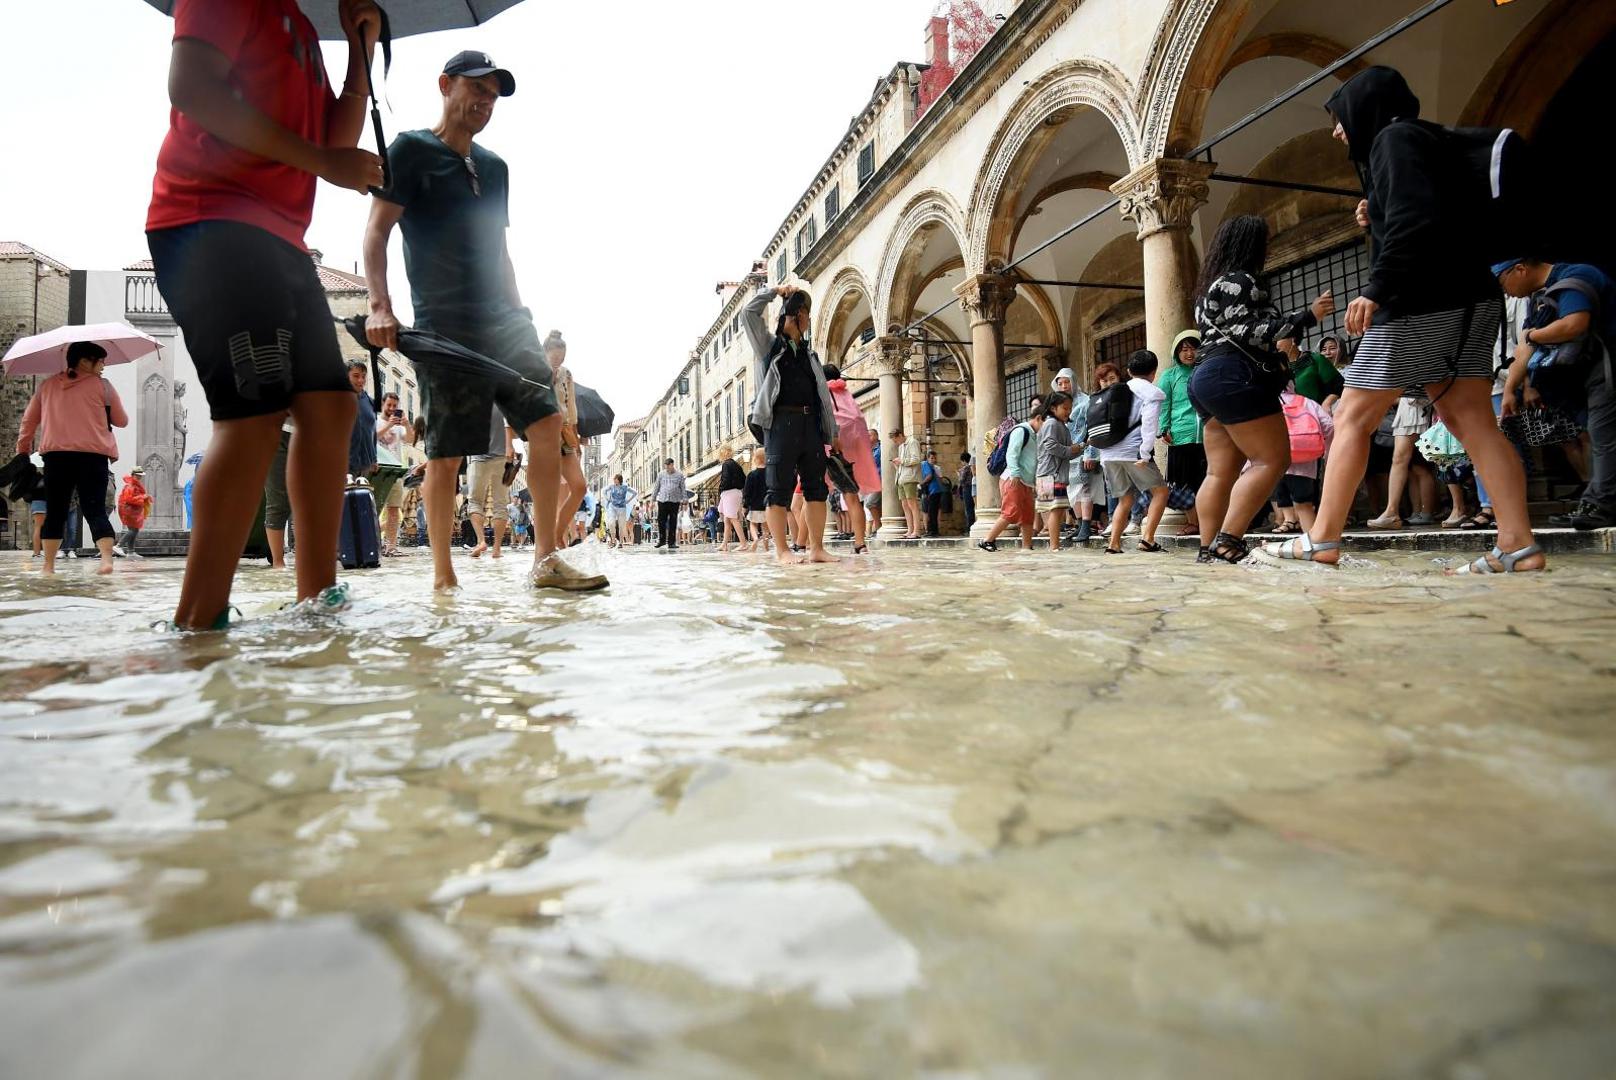 Obilna kiša poplavila je Hrvatsku, a Stradun je doslovno pod vodom.